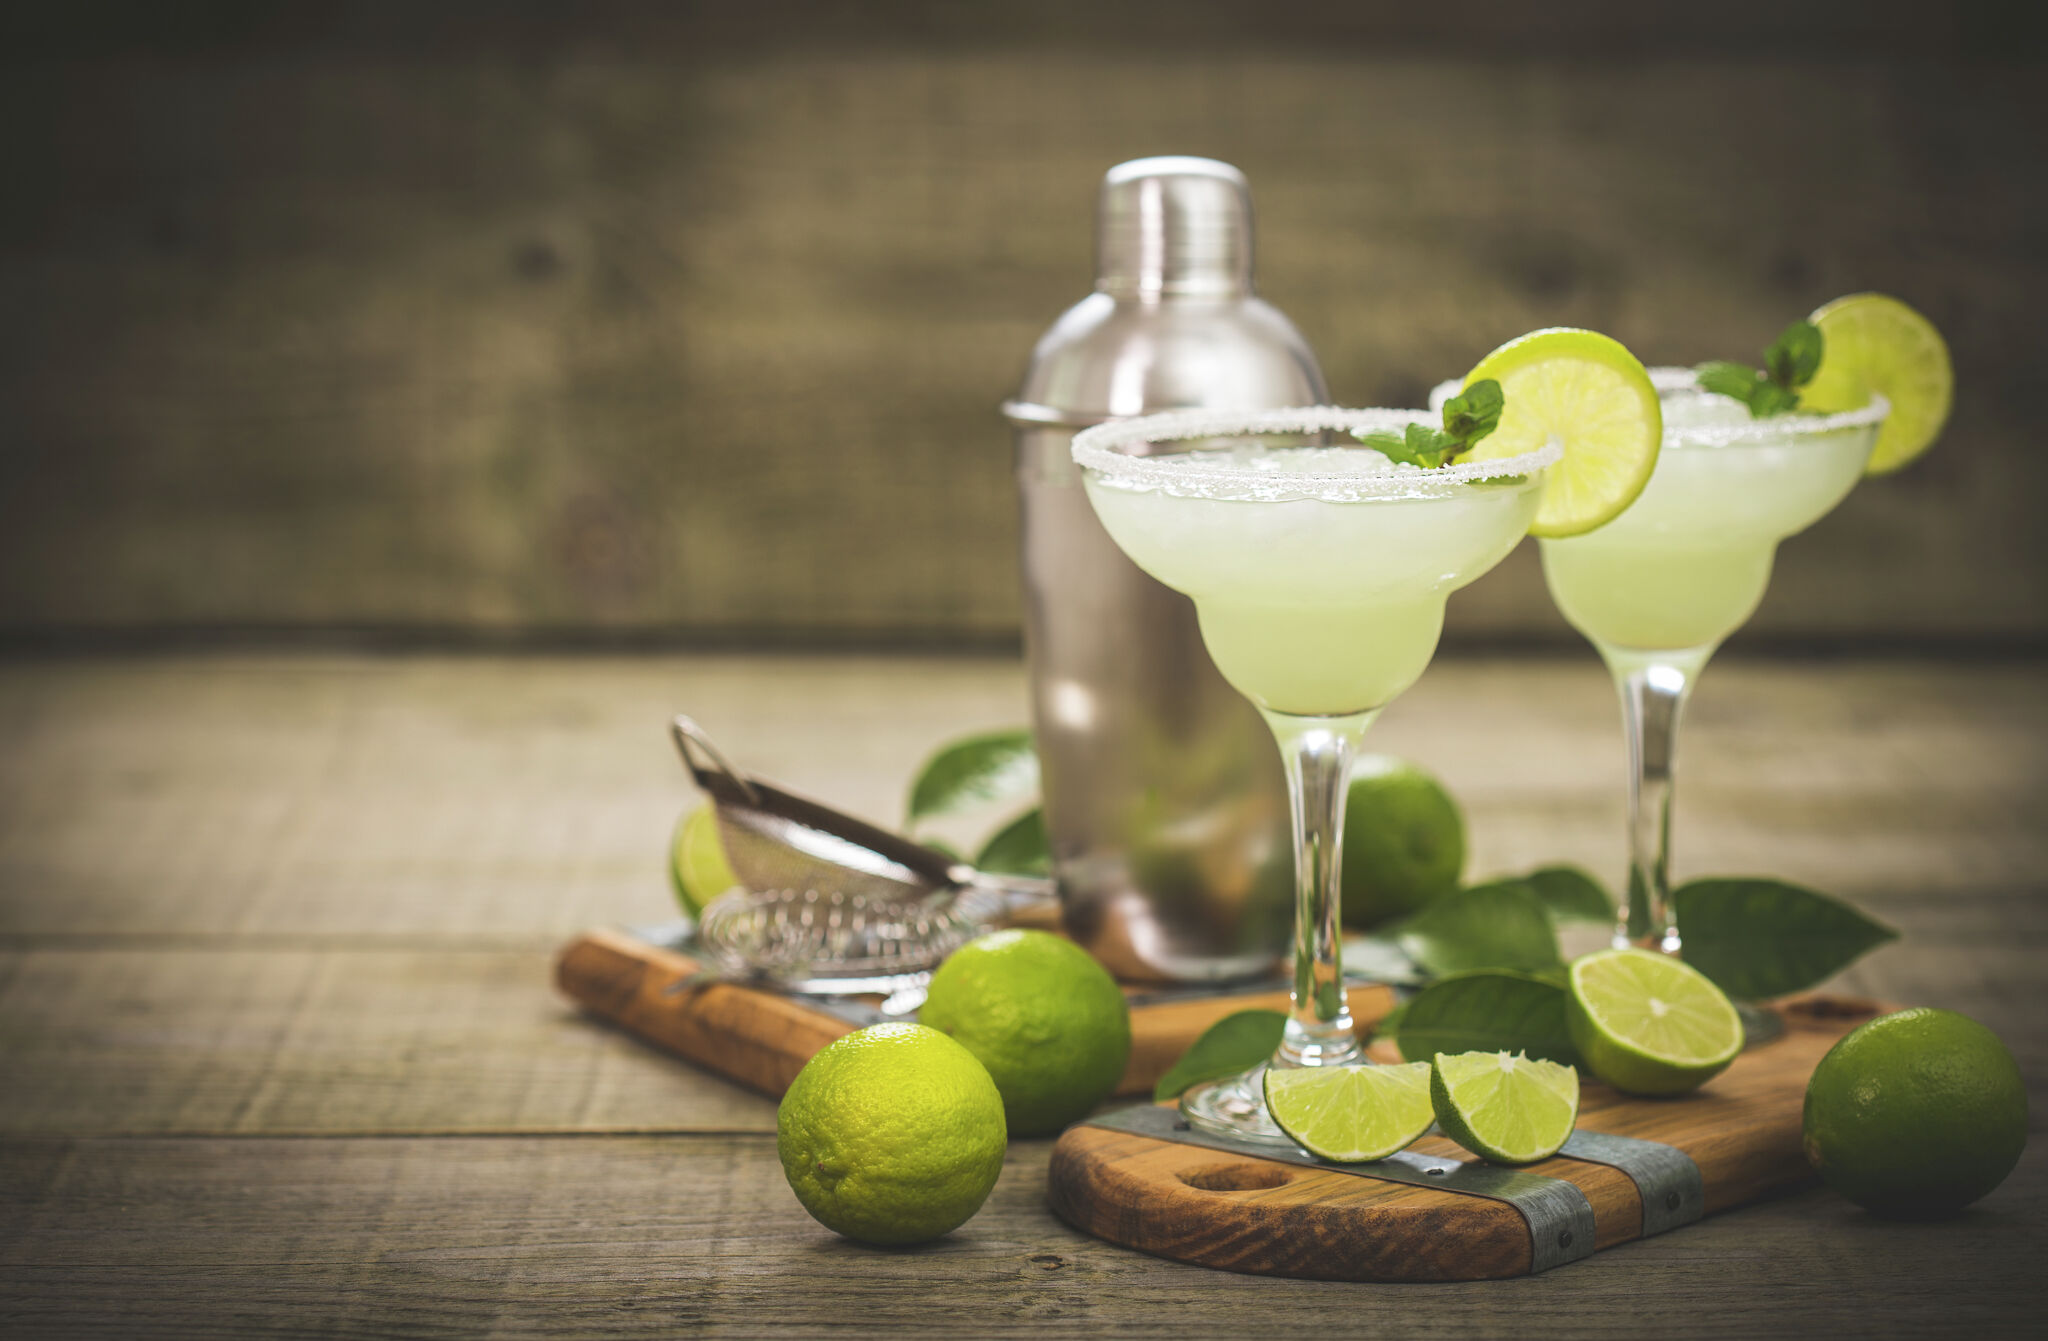 National Margarita Day Margarita recipes to celebrate on Feb. 22